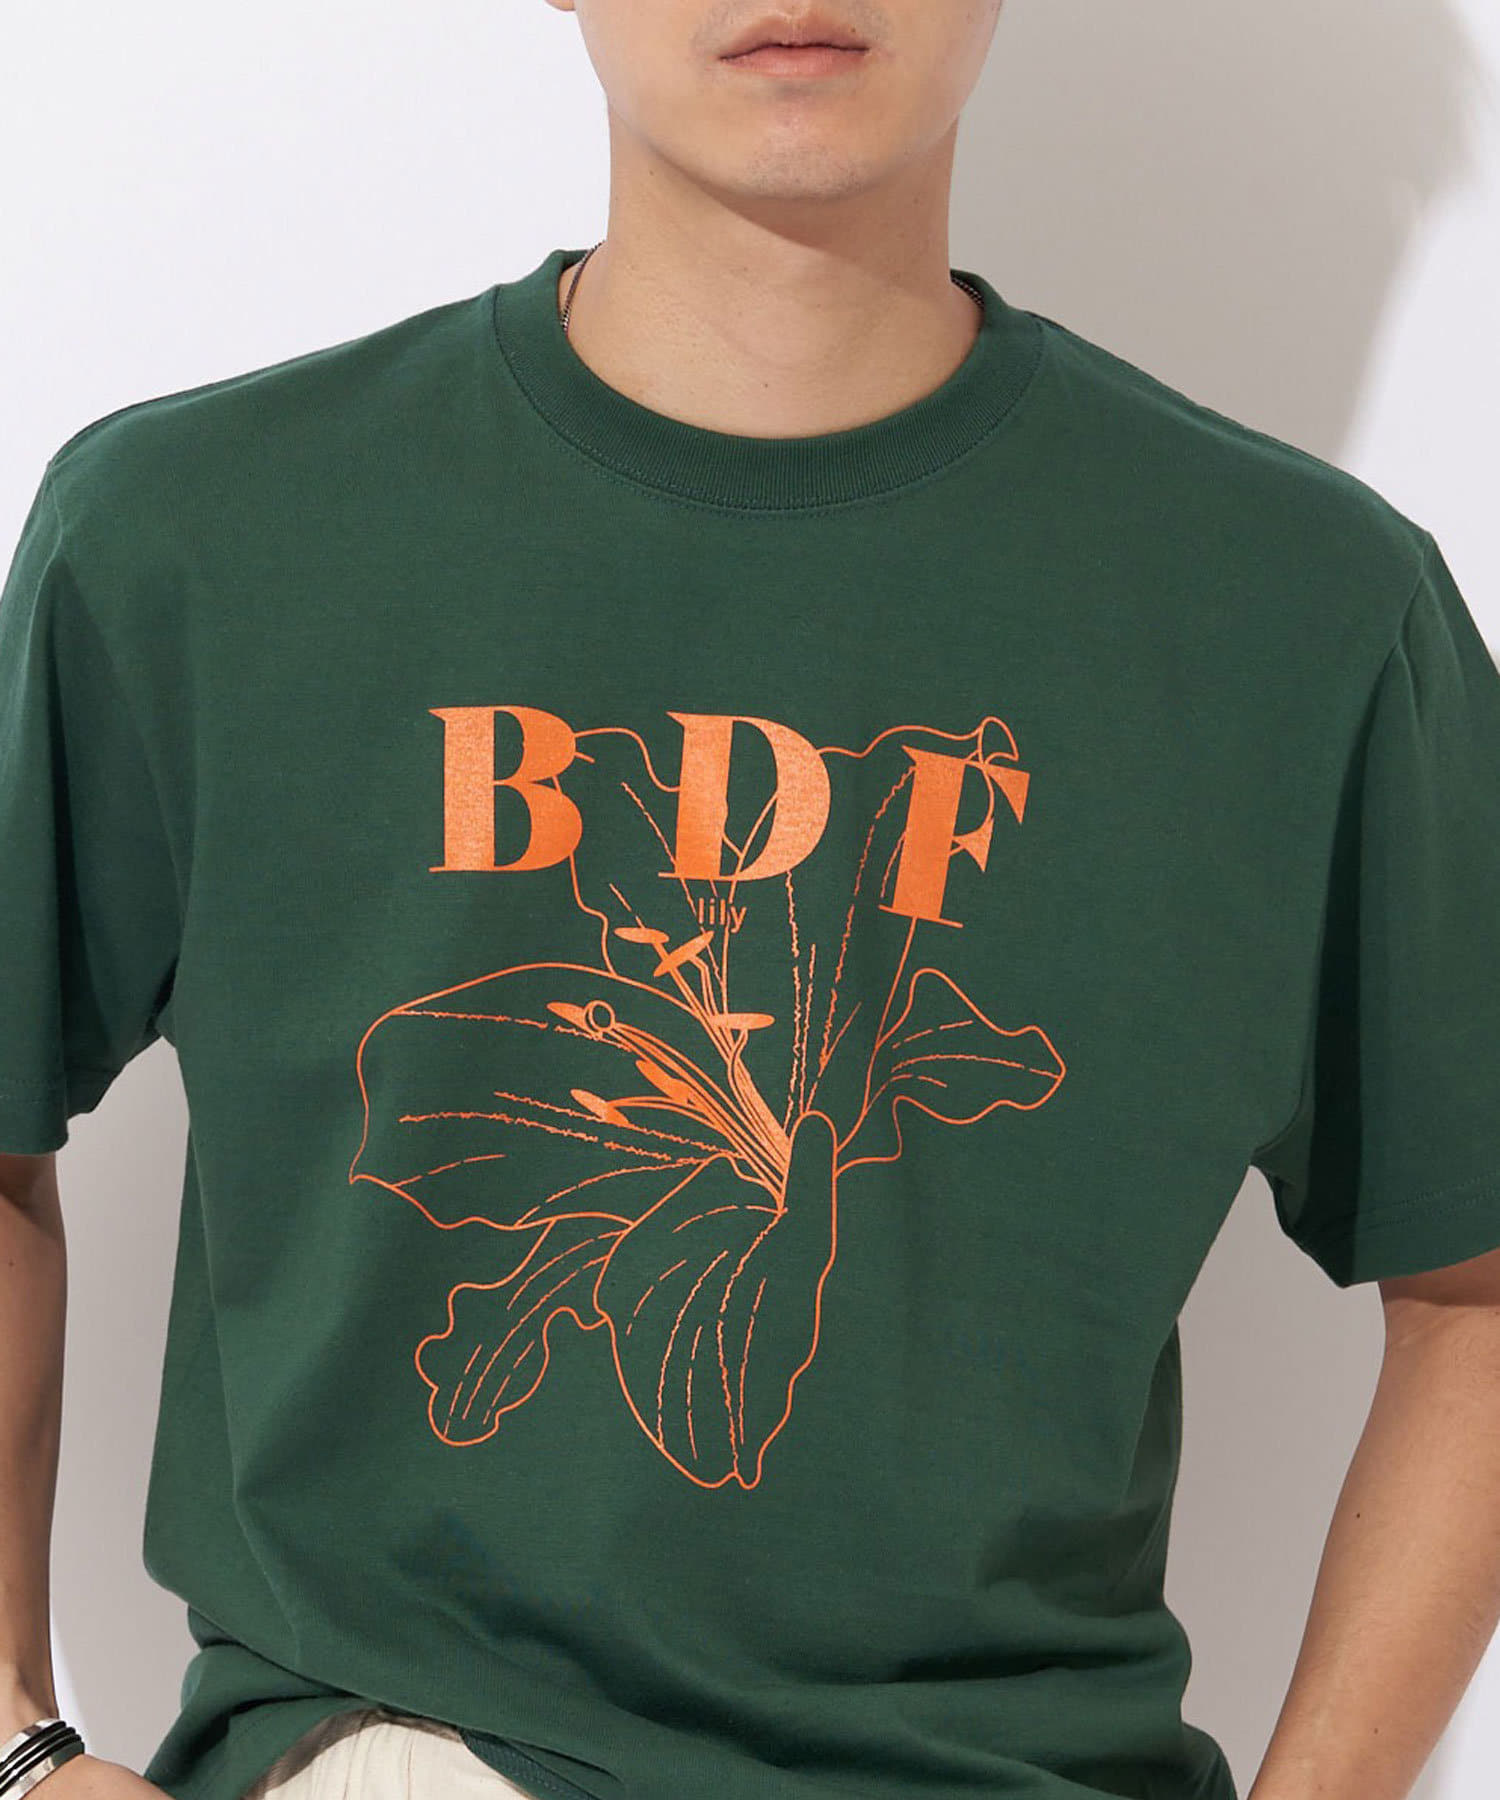 CIAOPANIC(チャオパニック) BDFフラワーロゴTシャツ